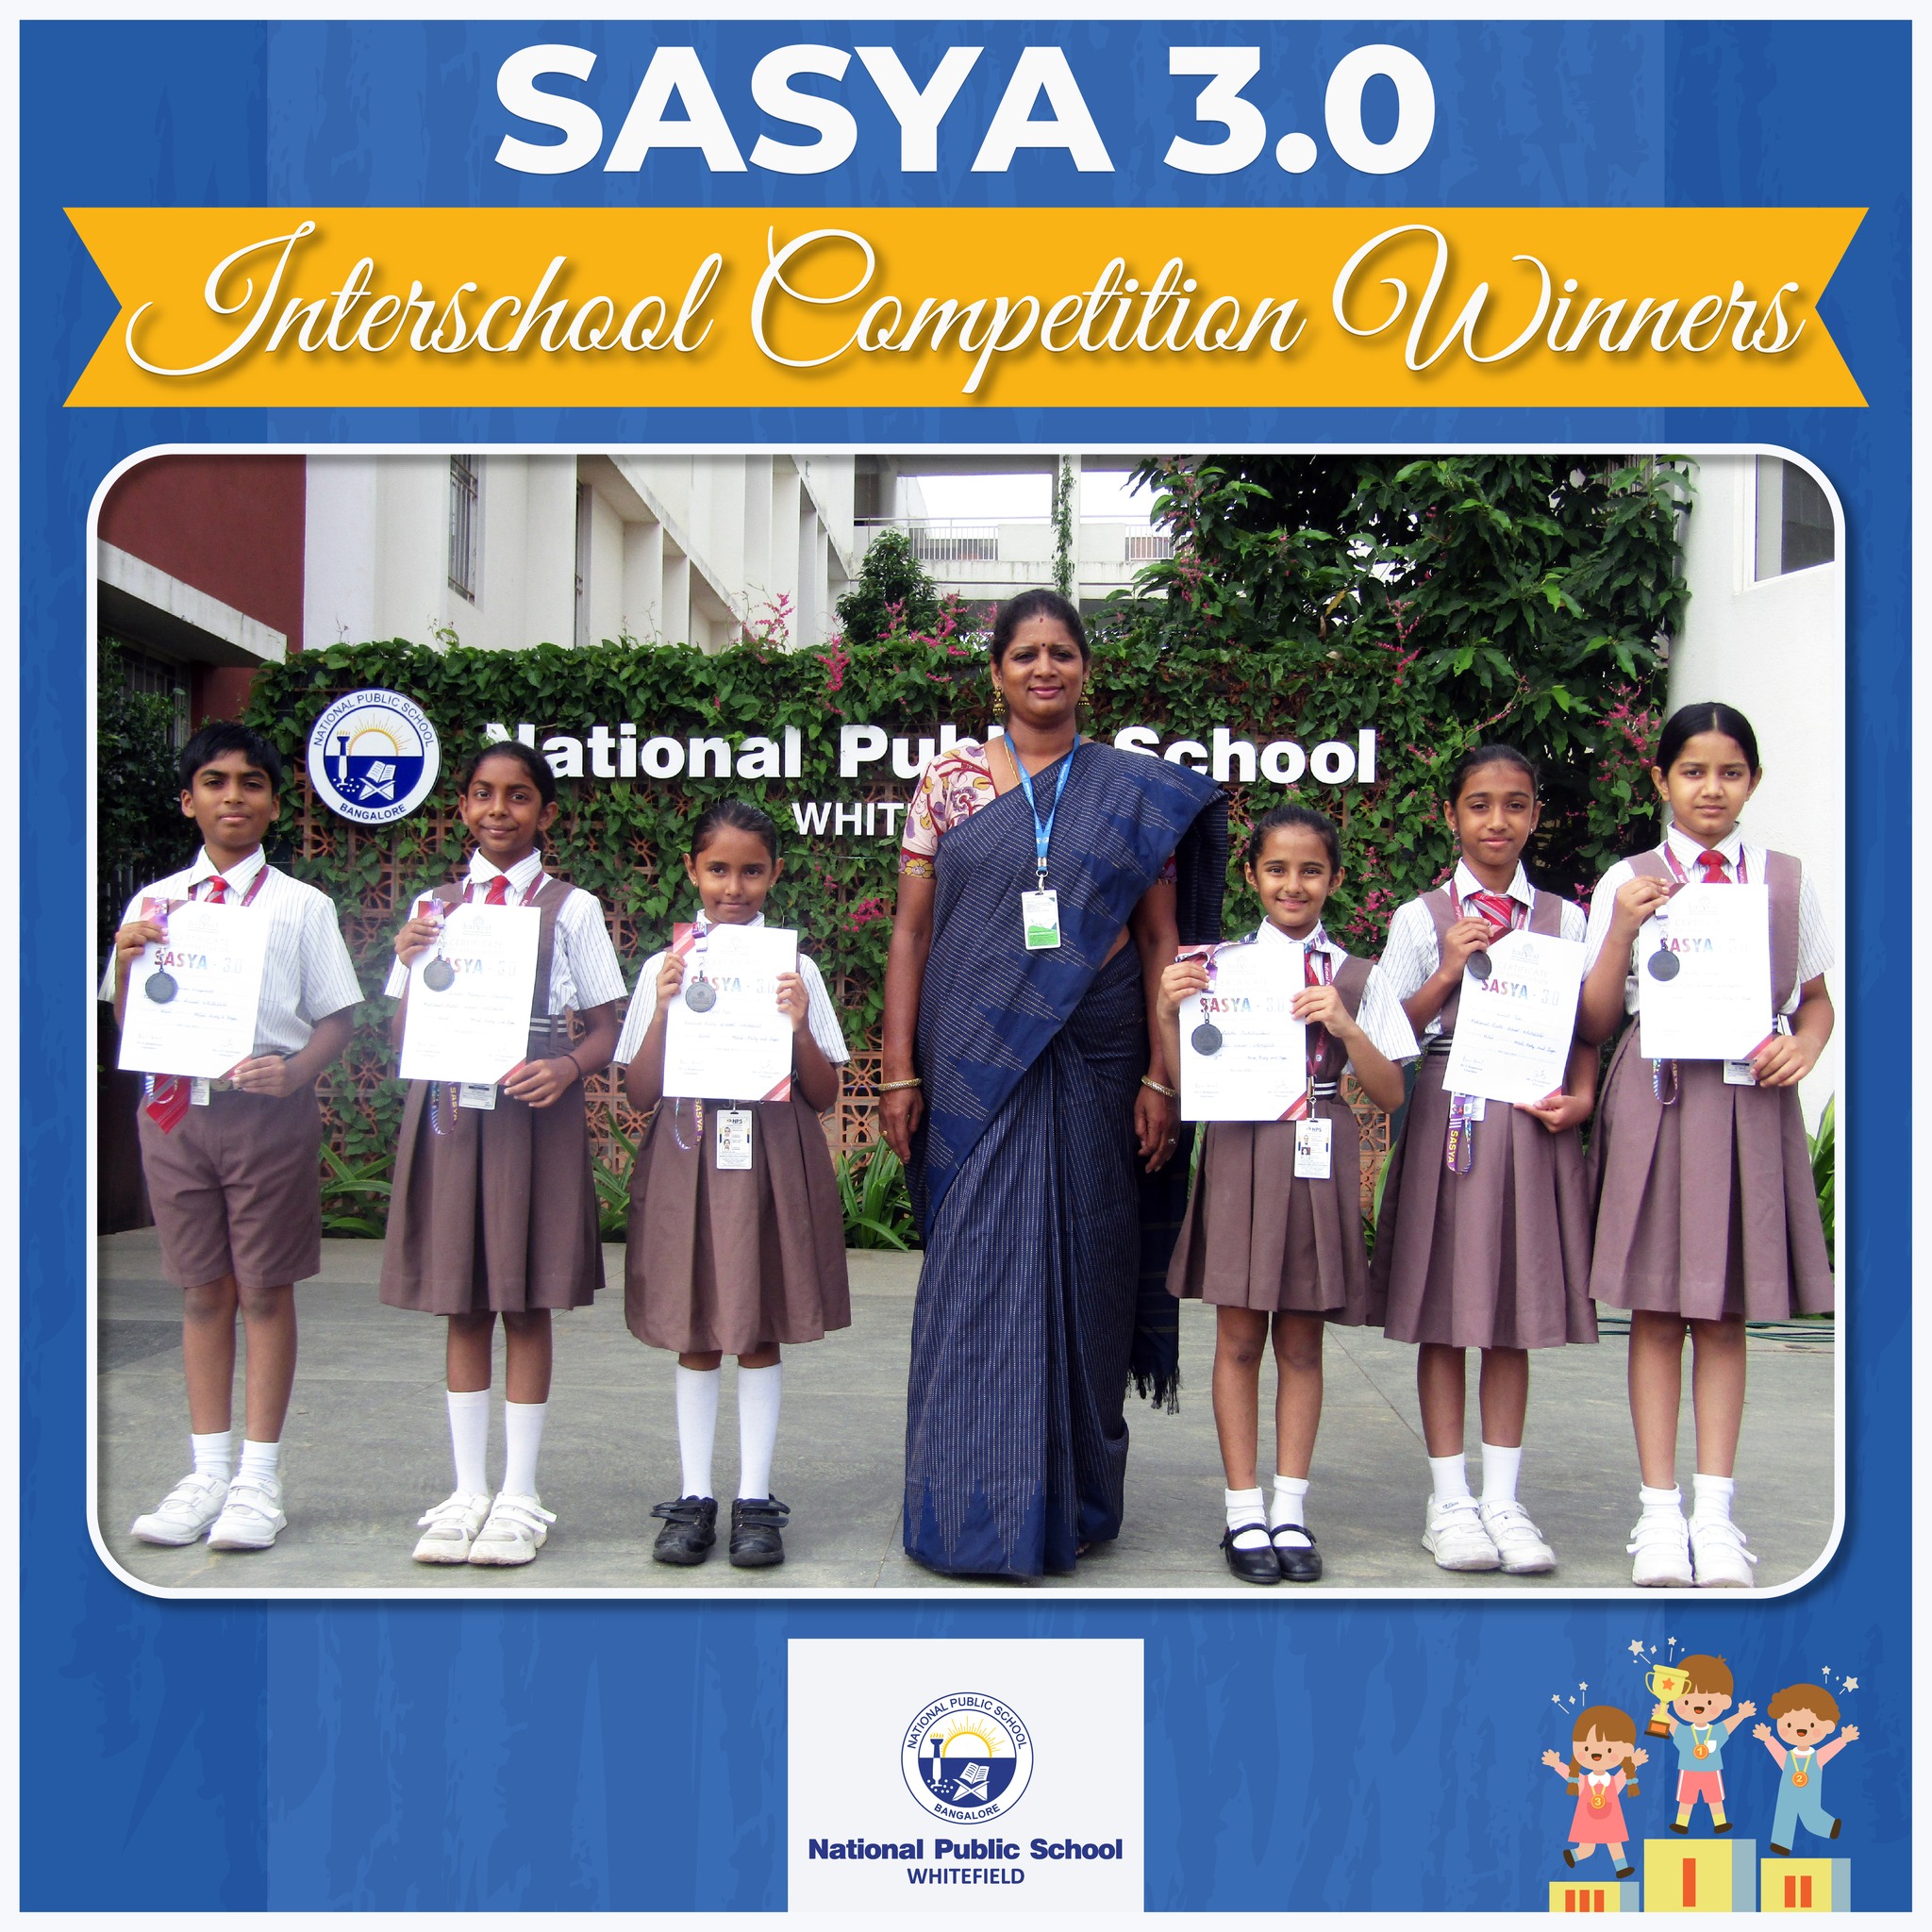 SASYA 3.0 Inter-School Competition